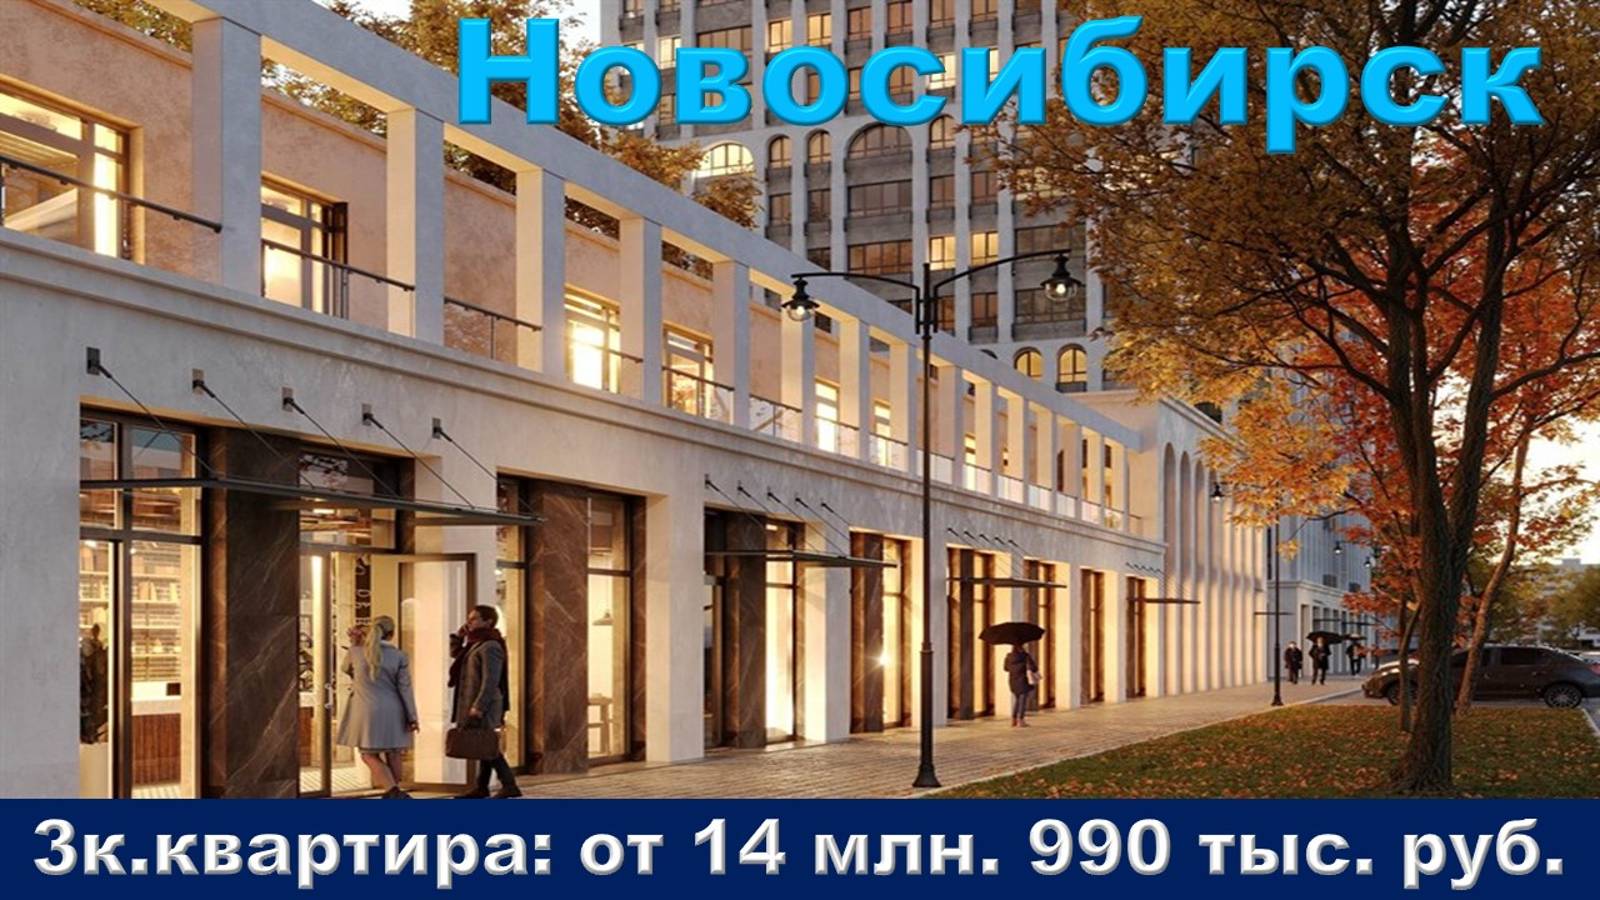 Новосибирск. 3к. квартира от 14 млн. 990 тыс. руб.